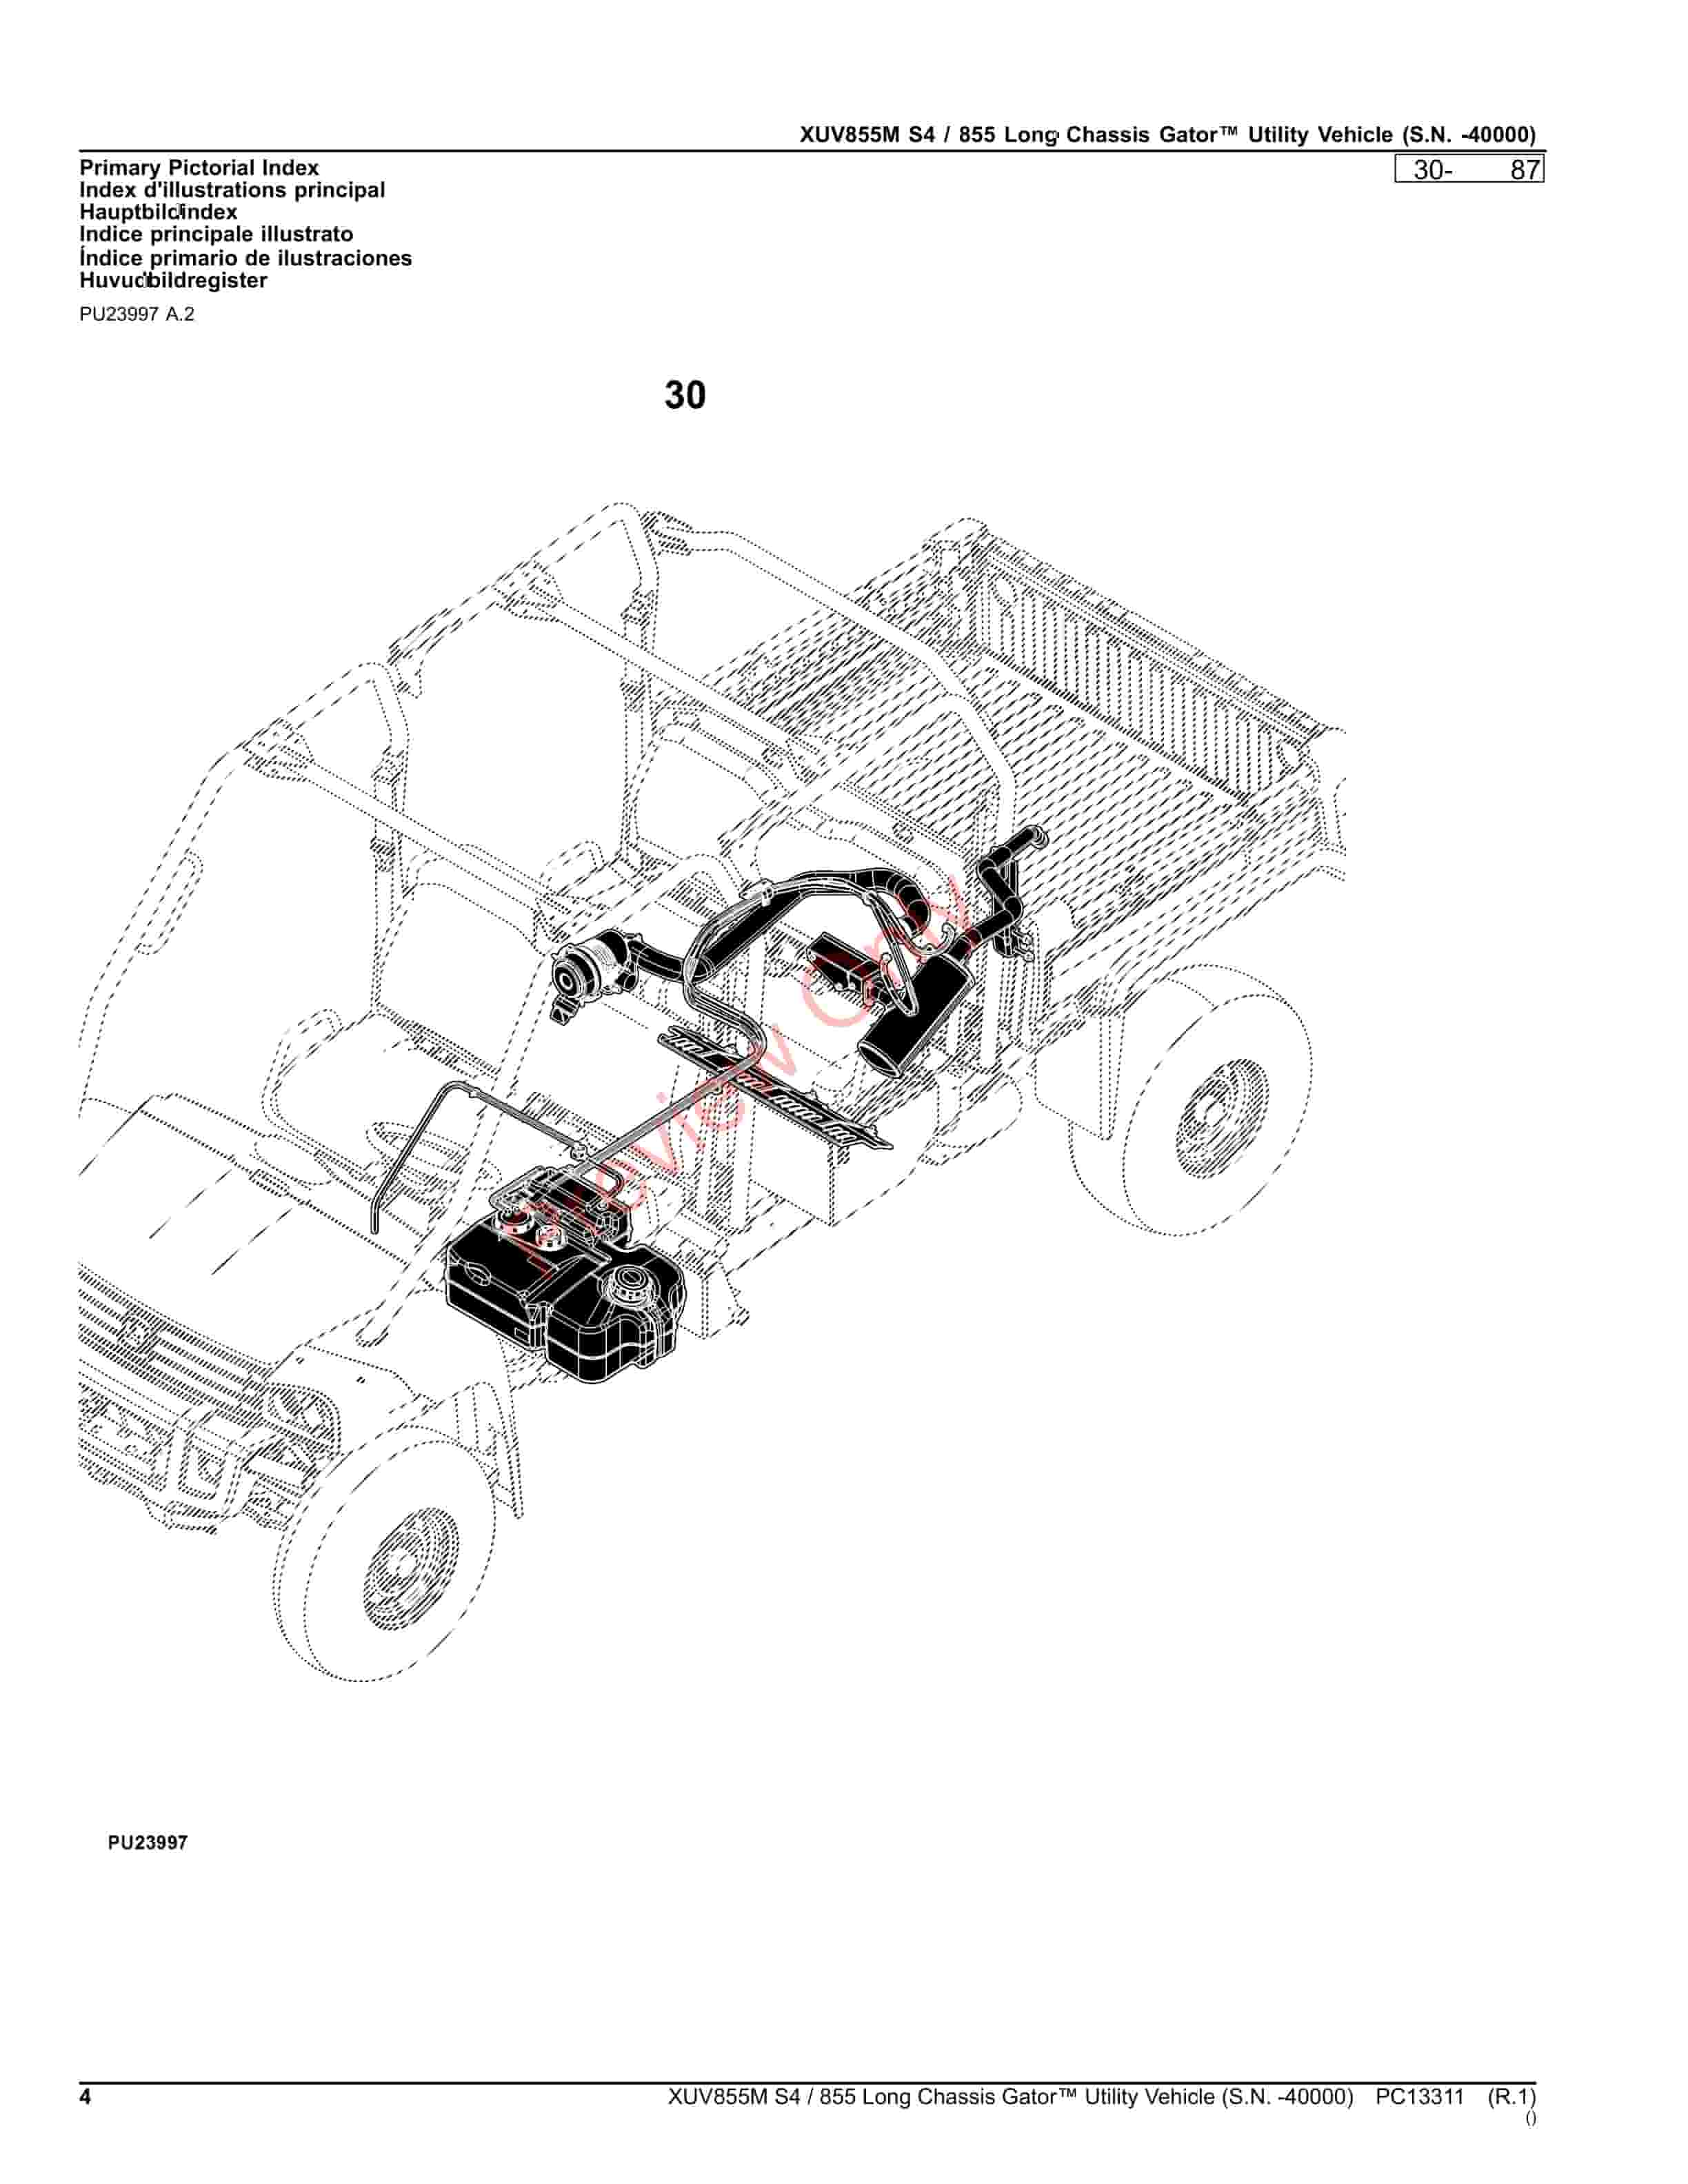 John Deere XUV855M S4 855 Long Chassis Gator Utility Vehicle (S.N. Parts Catalog PC13311 10SEP23-4